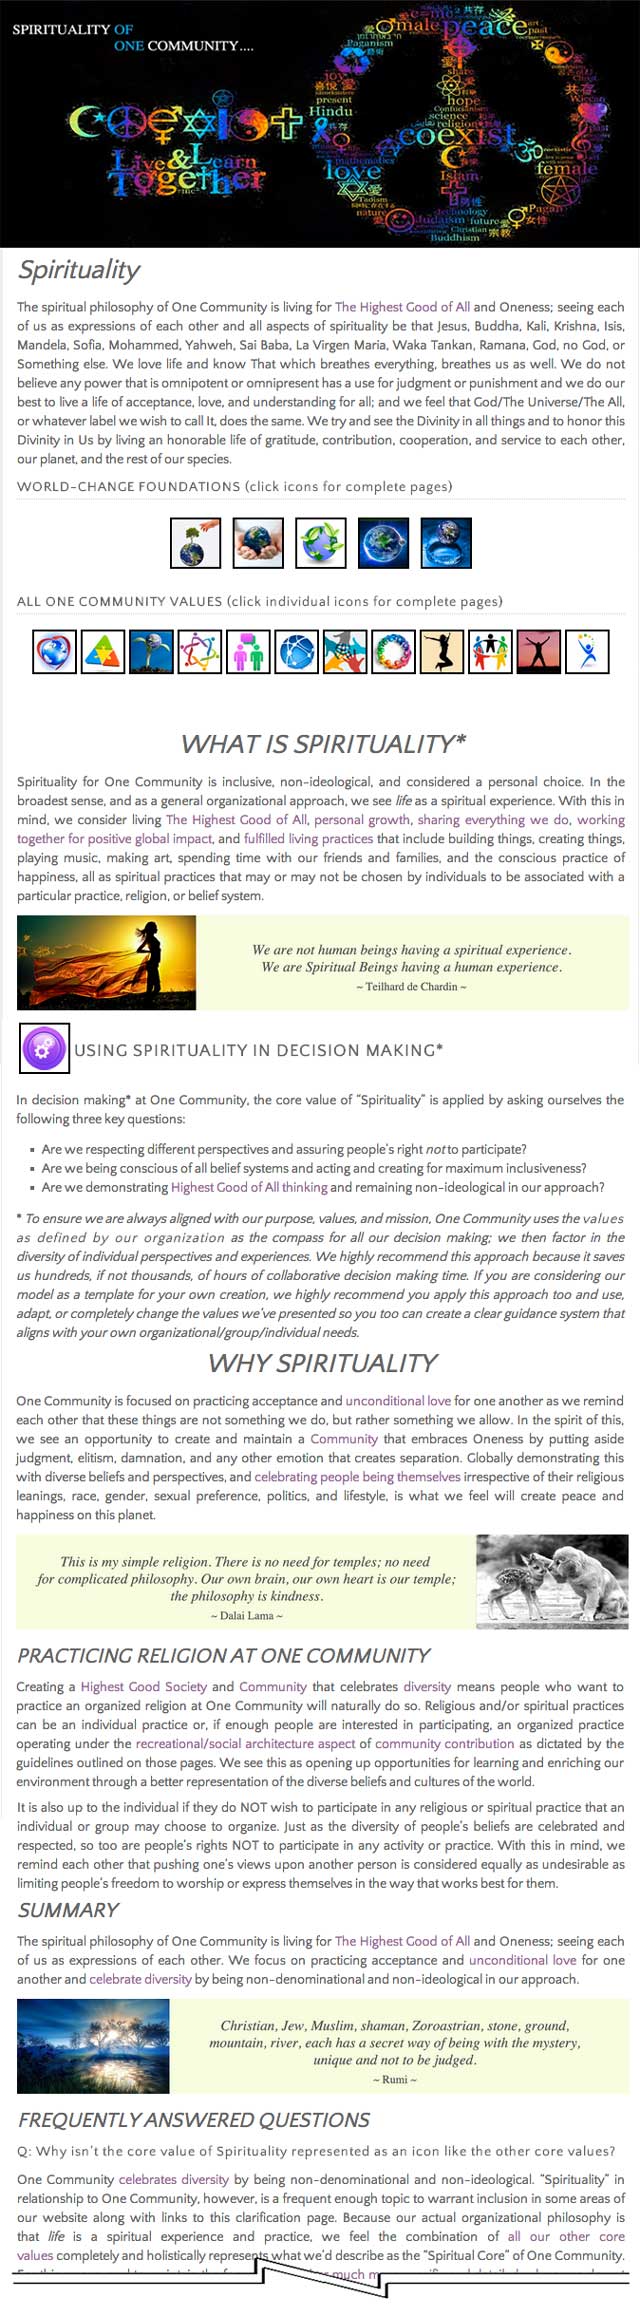 Spirituality page, One Community